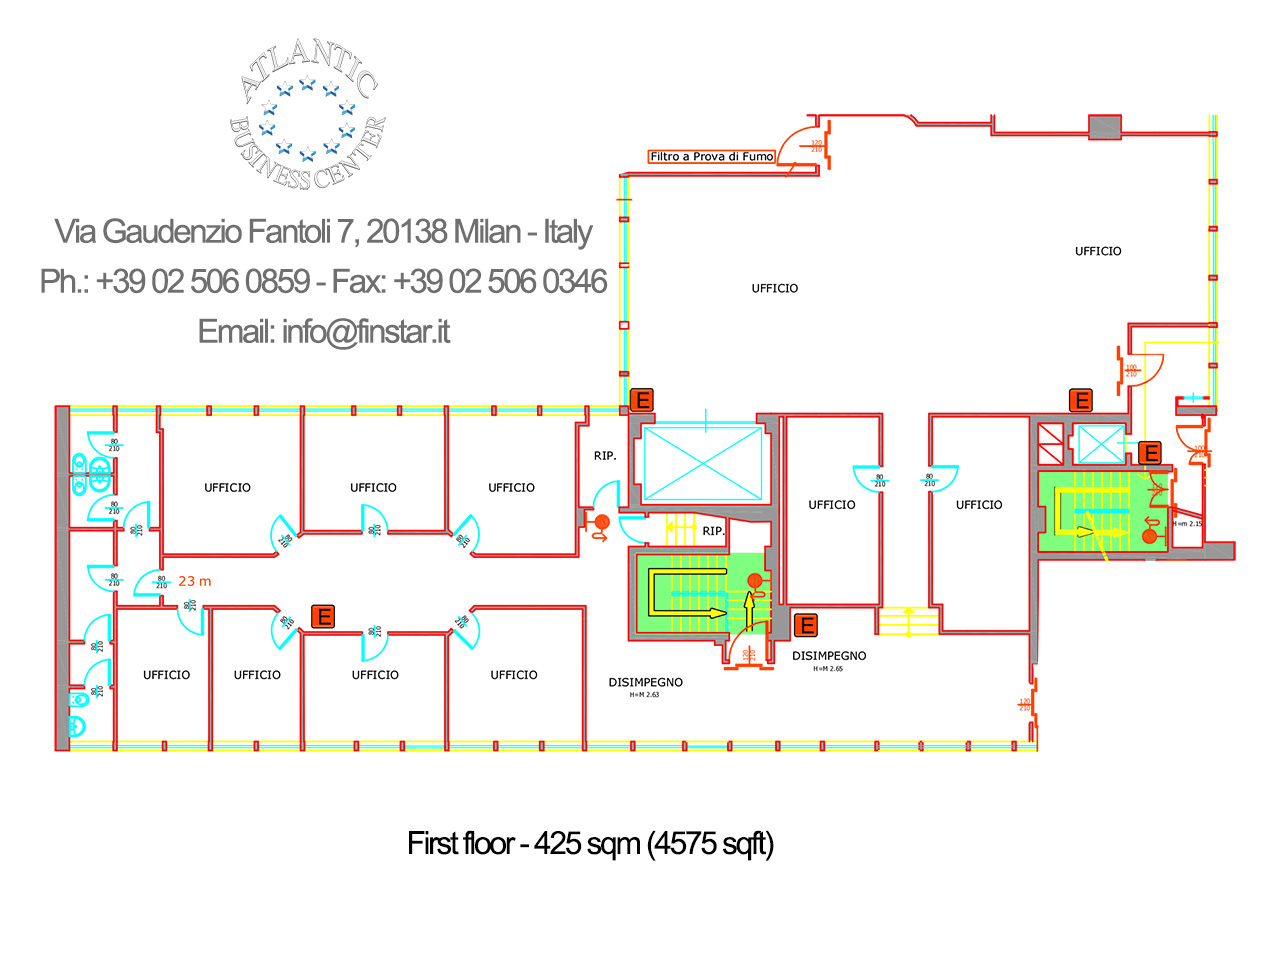 Office in milan 425 sqm (4575 sqft) - new floorplan with openspace